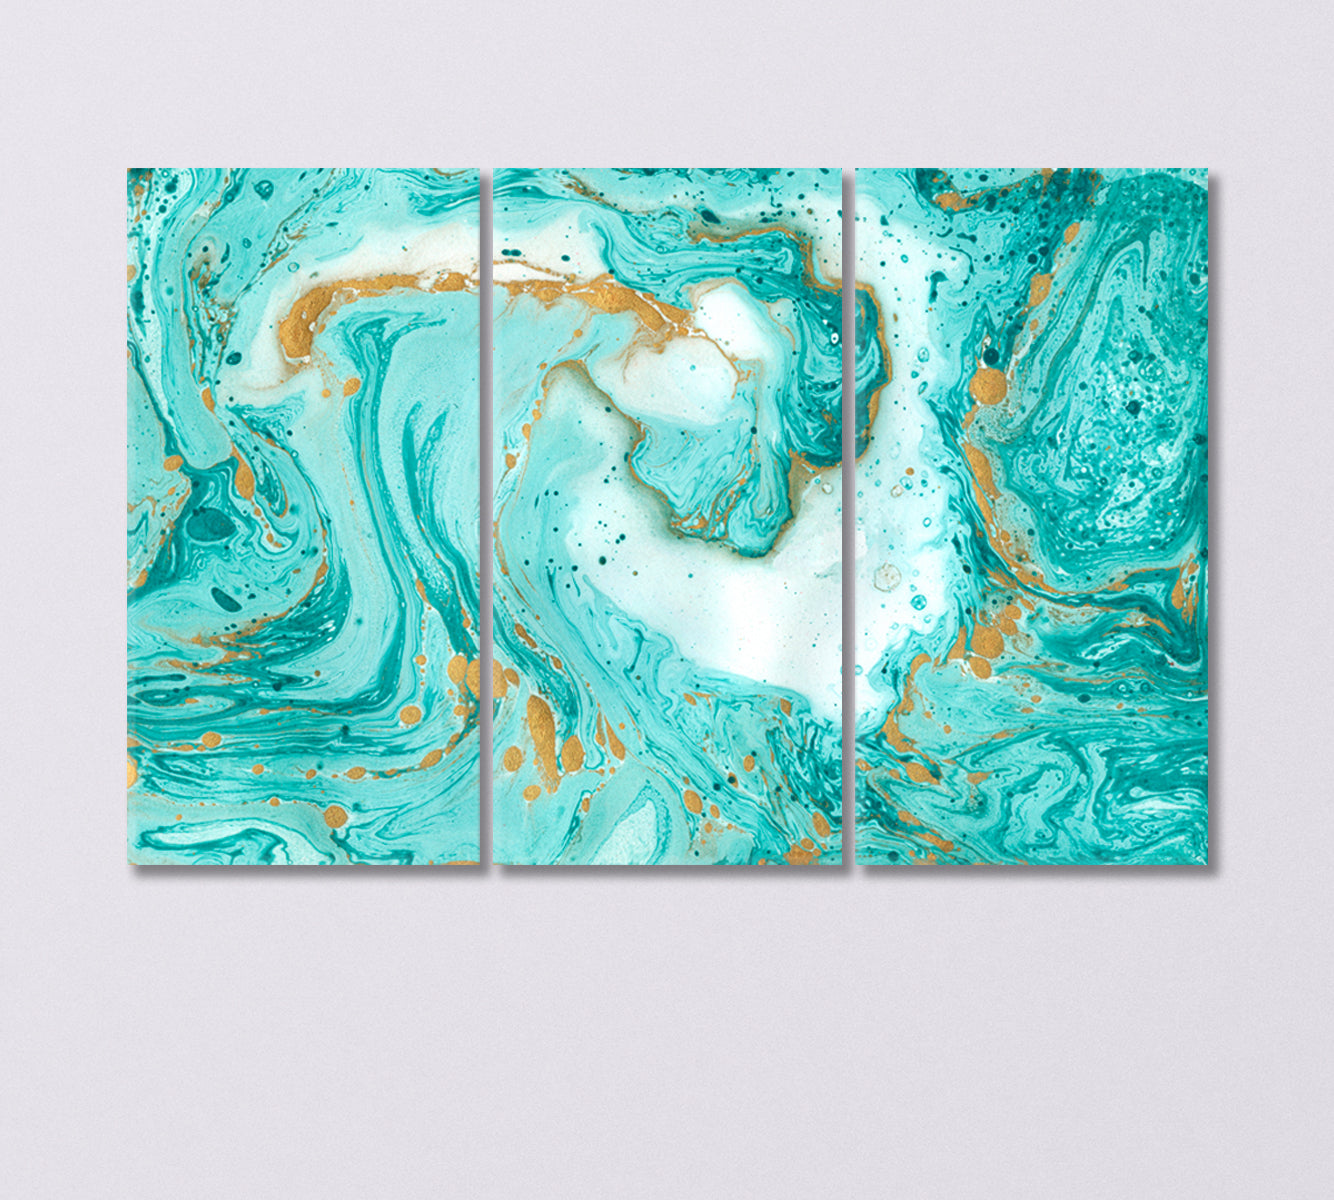 Creative Abstract Liquid Turquoise Pattern Canvas Print-Canvas Print-CetArt-3 Panels-36x24 inches-CetArt